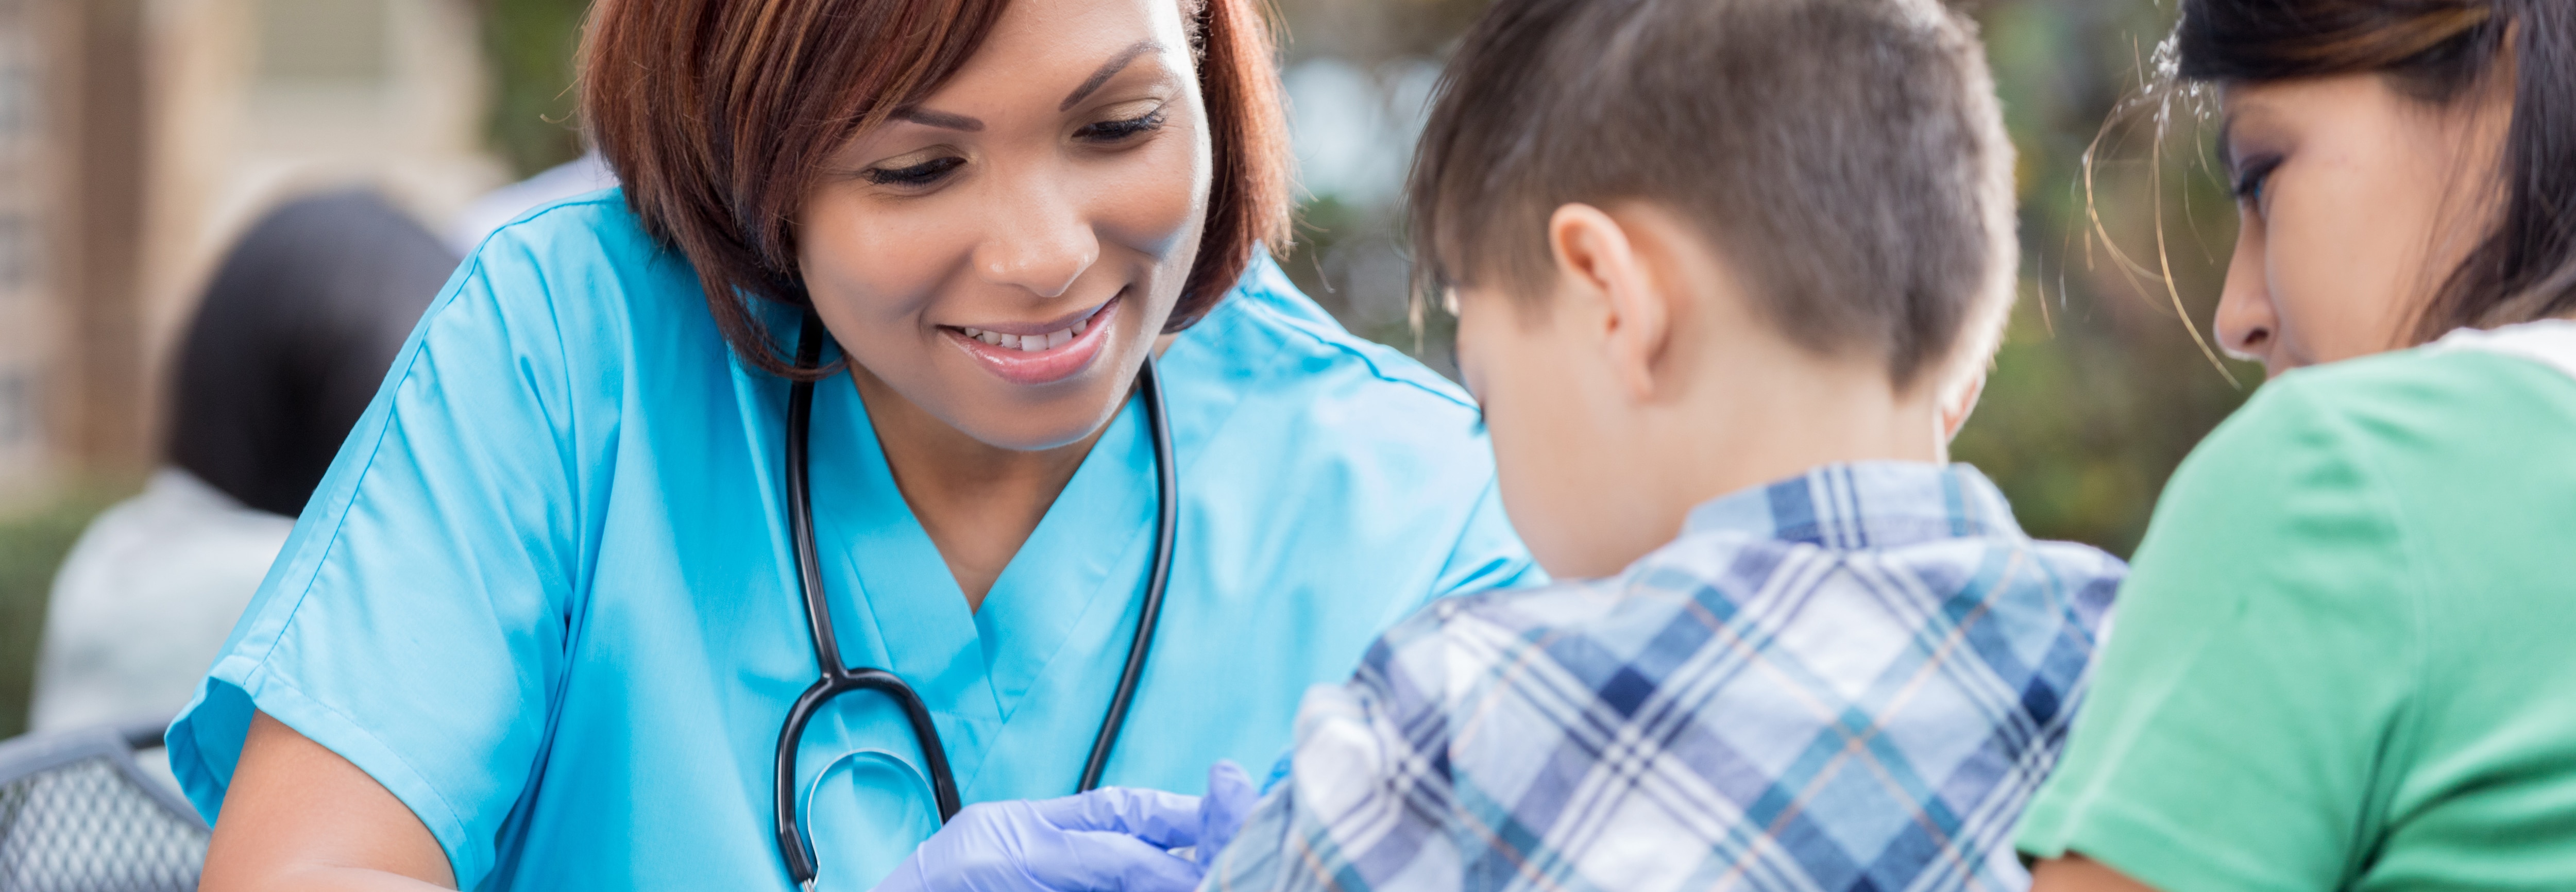 nurse-gives-child-vaccine